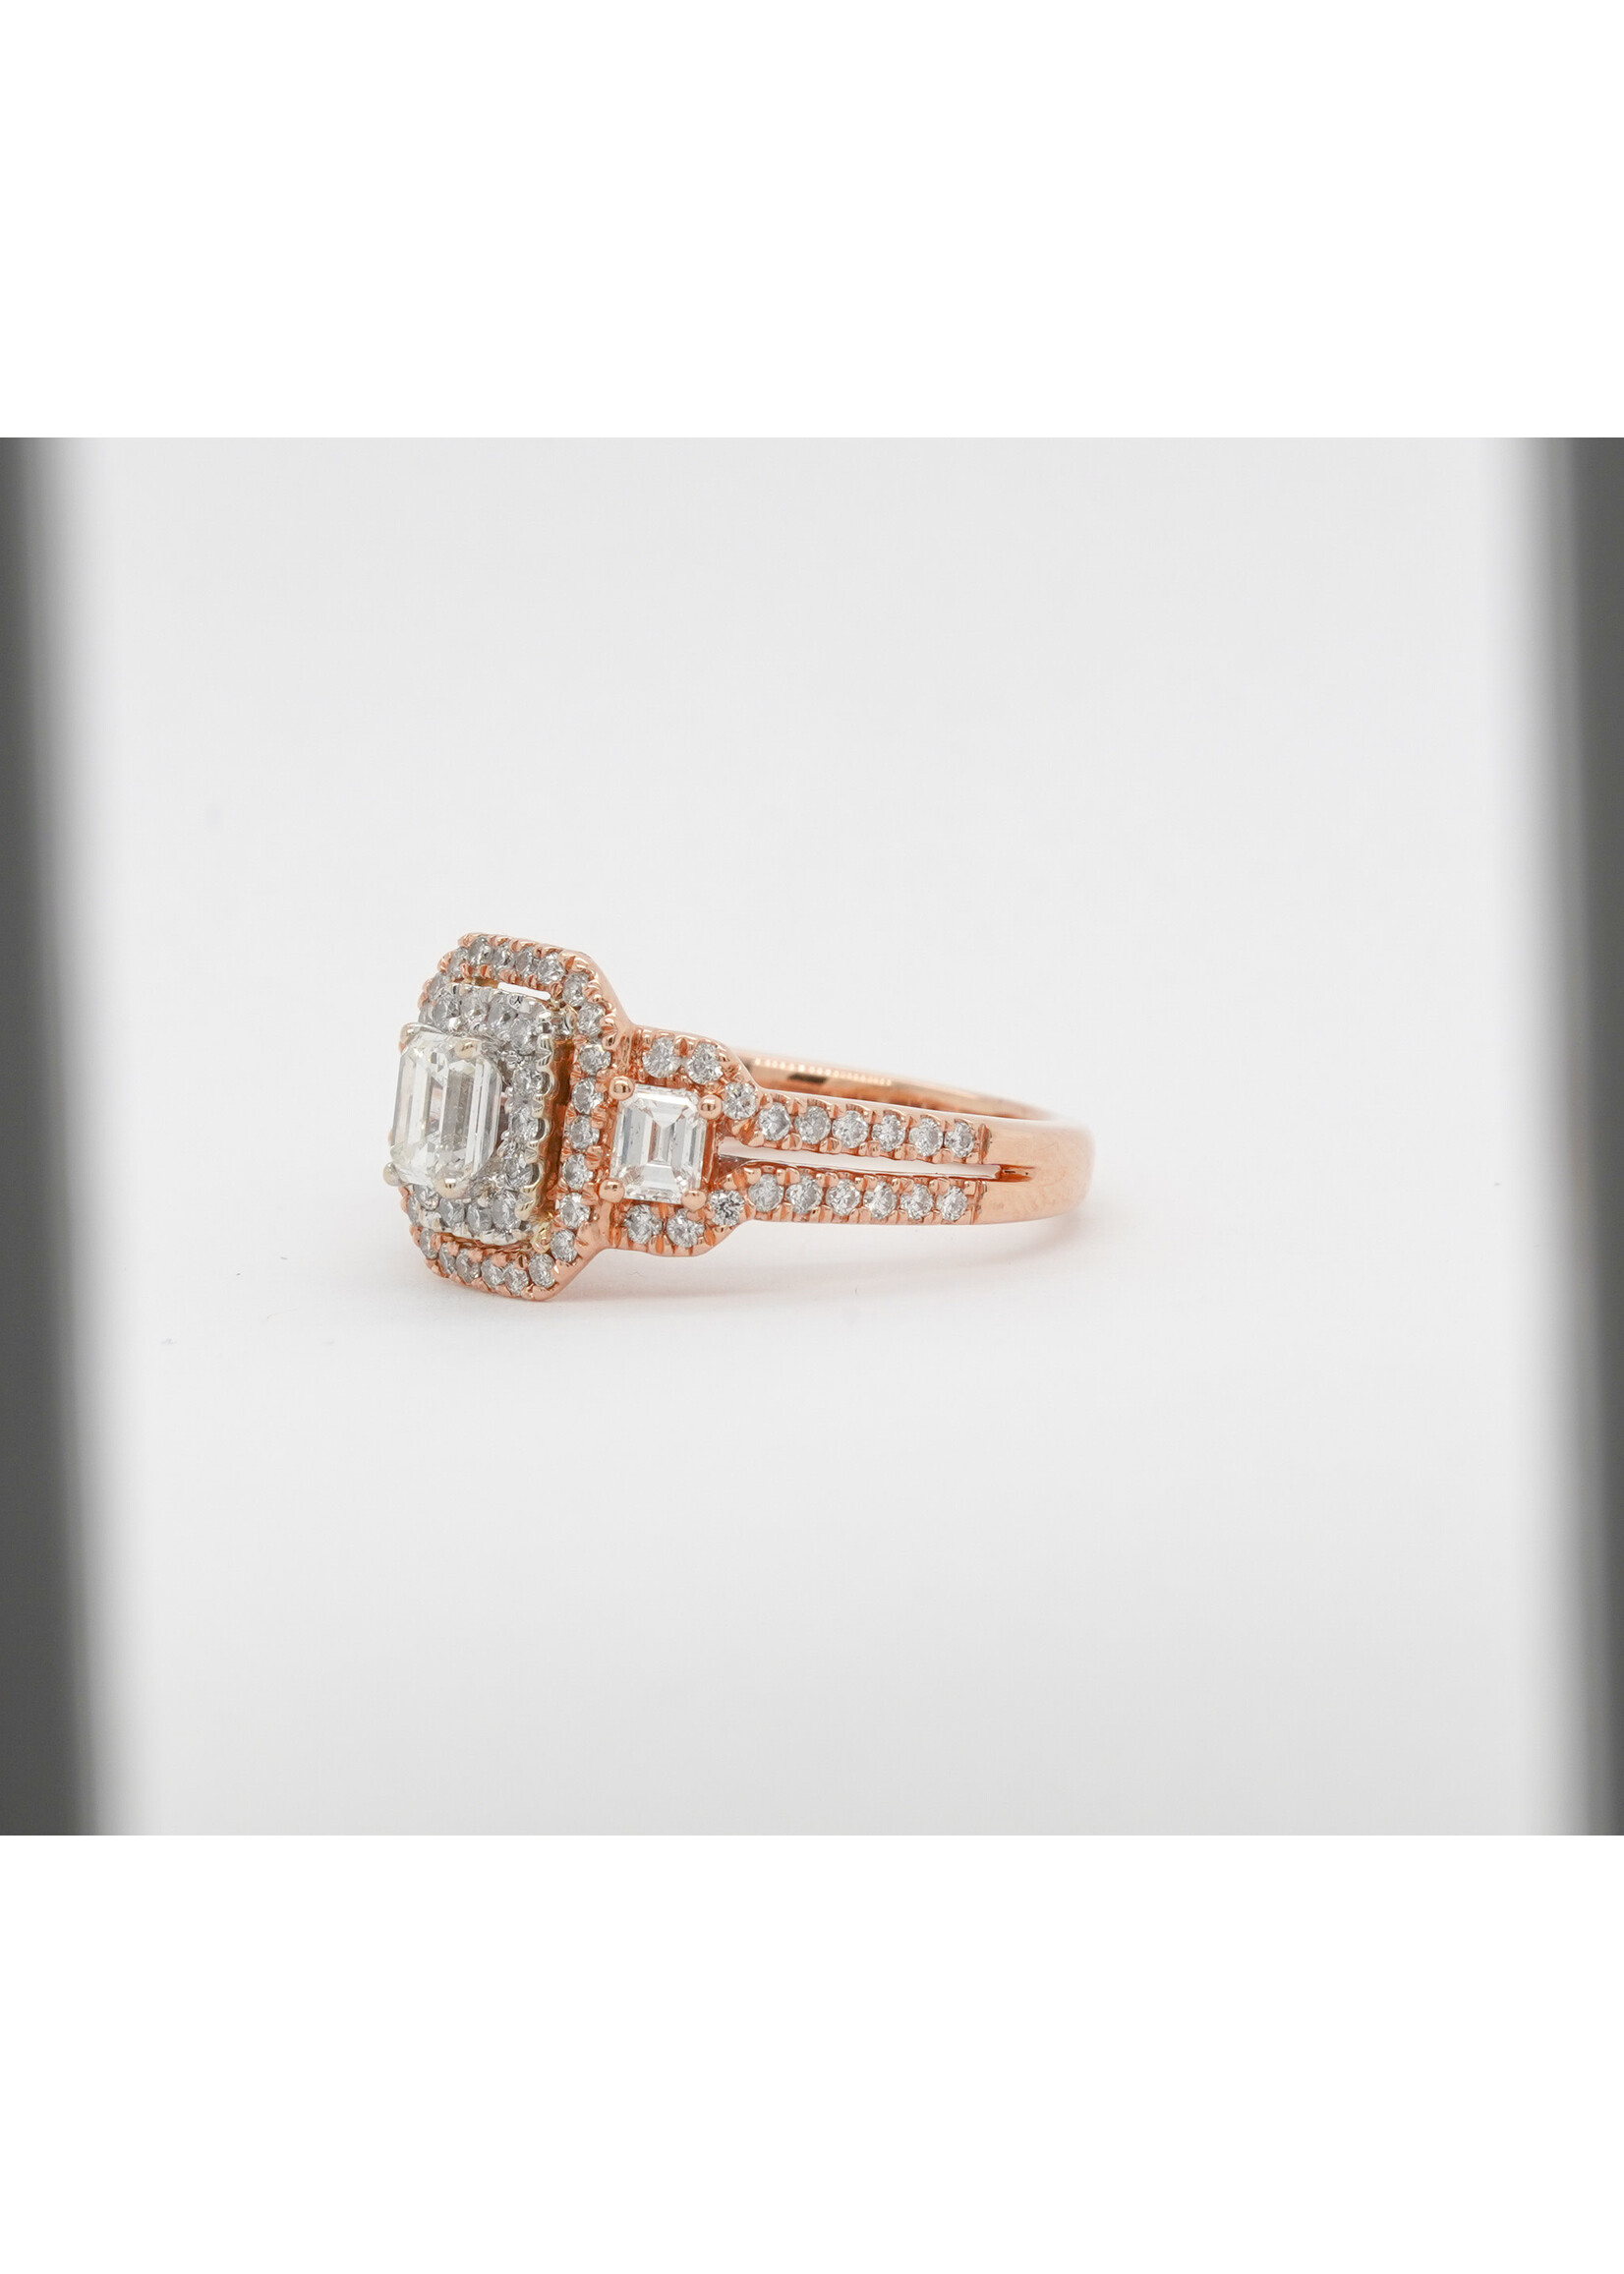 14KR 6.49g 1.60cw (.50ctr) H/VS2 Emerald Cut Diamond Three Stone Halo Engagement Ring (size 6)